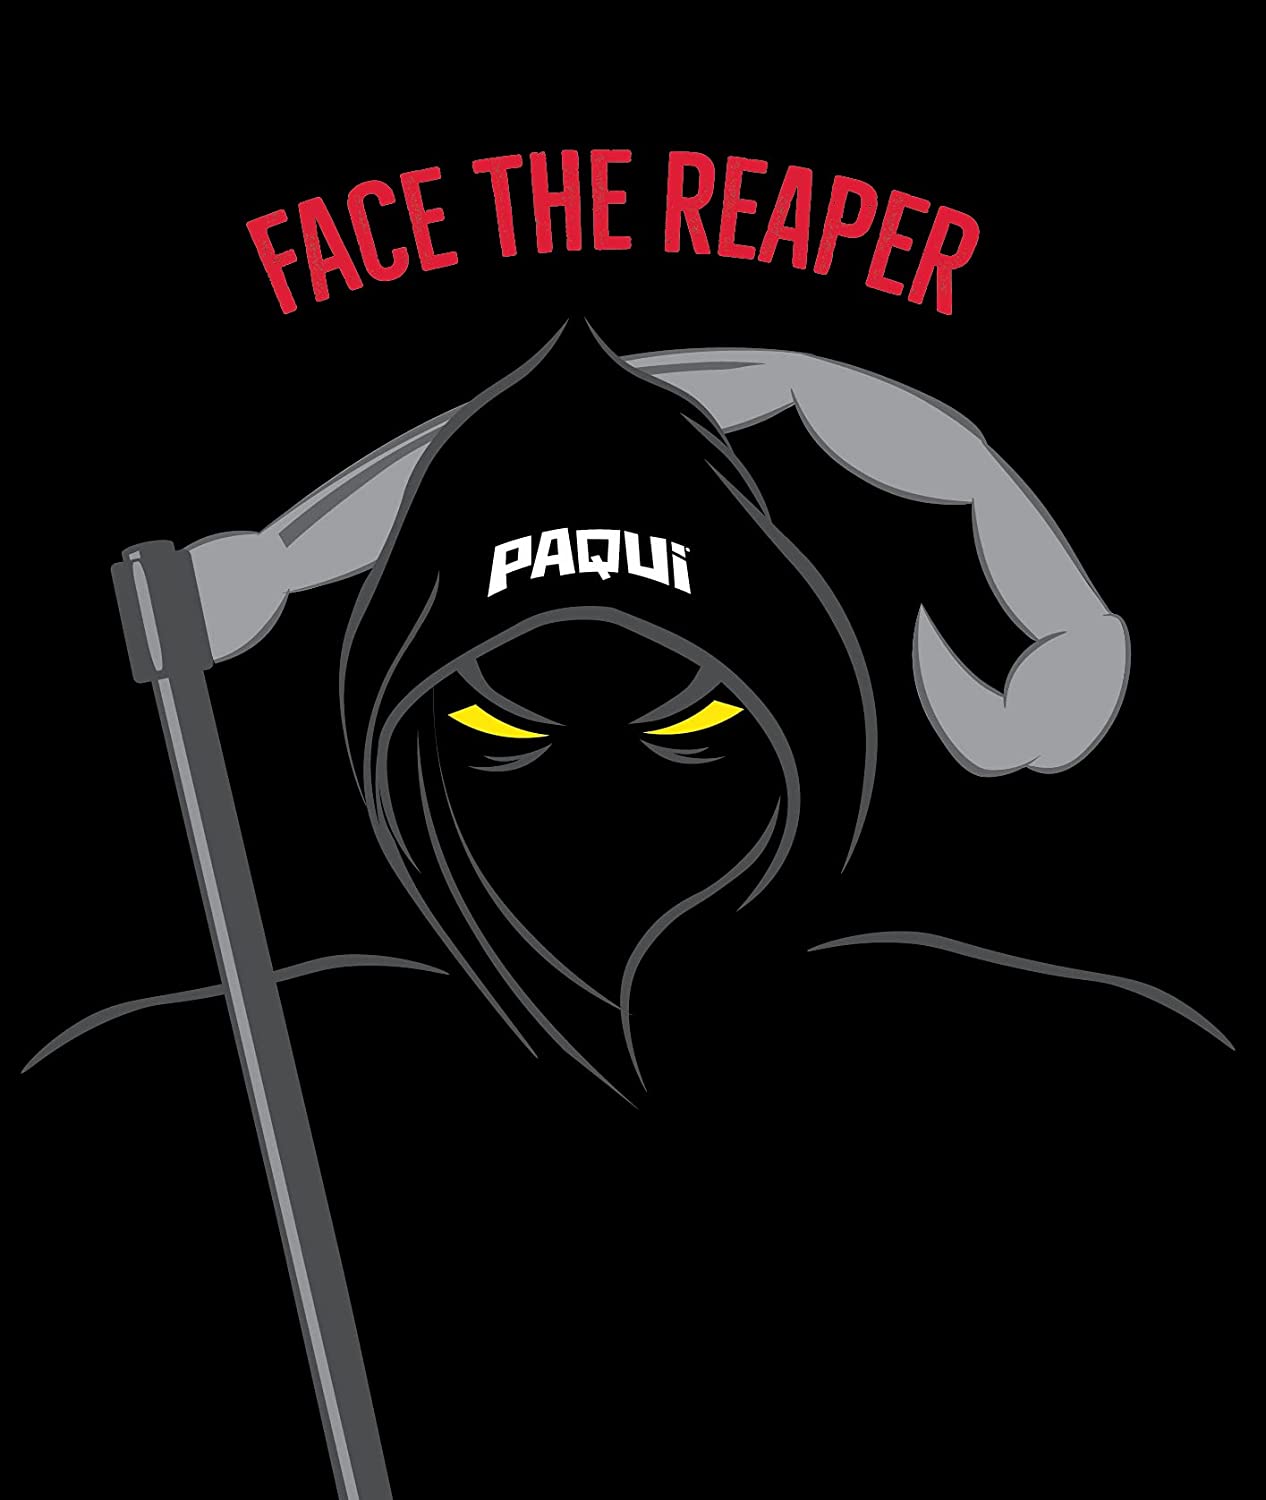 PAQUI 🔥2021 ONE CHIP CHALLENGE 🔥THE CAROLINA REAPER + SCORPION PEPPER - NEW!!!